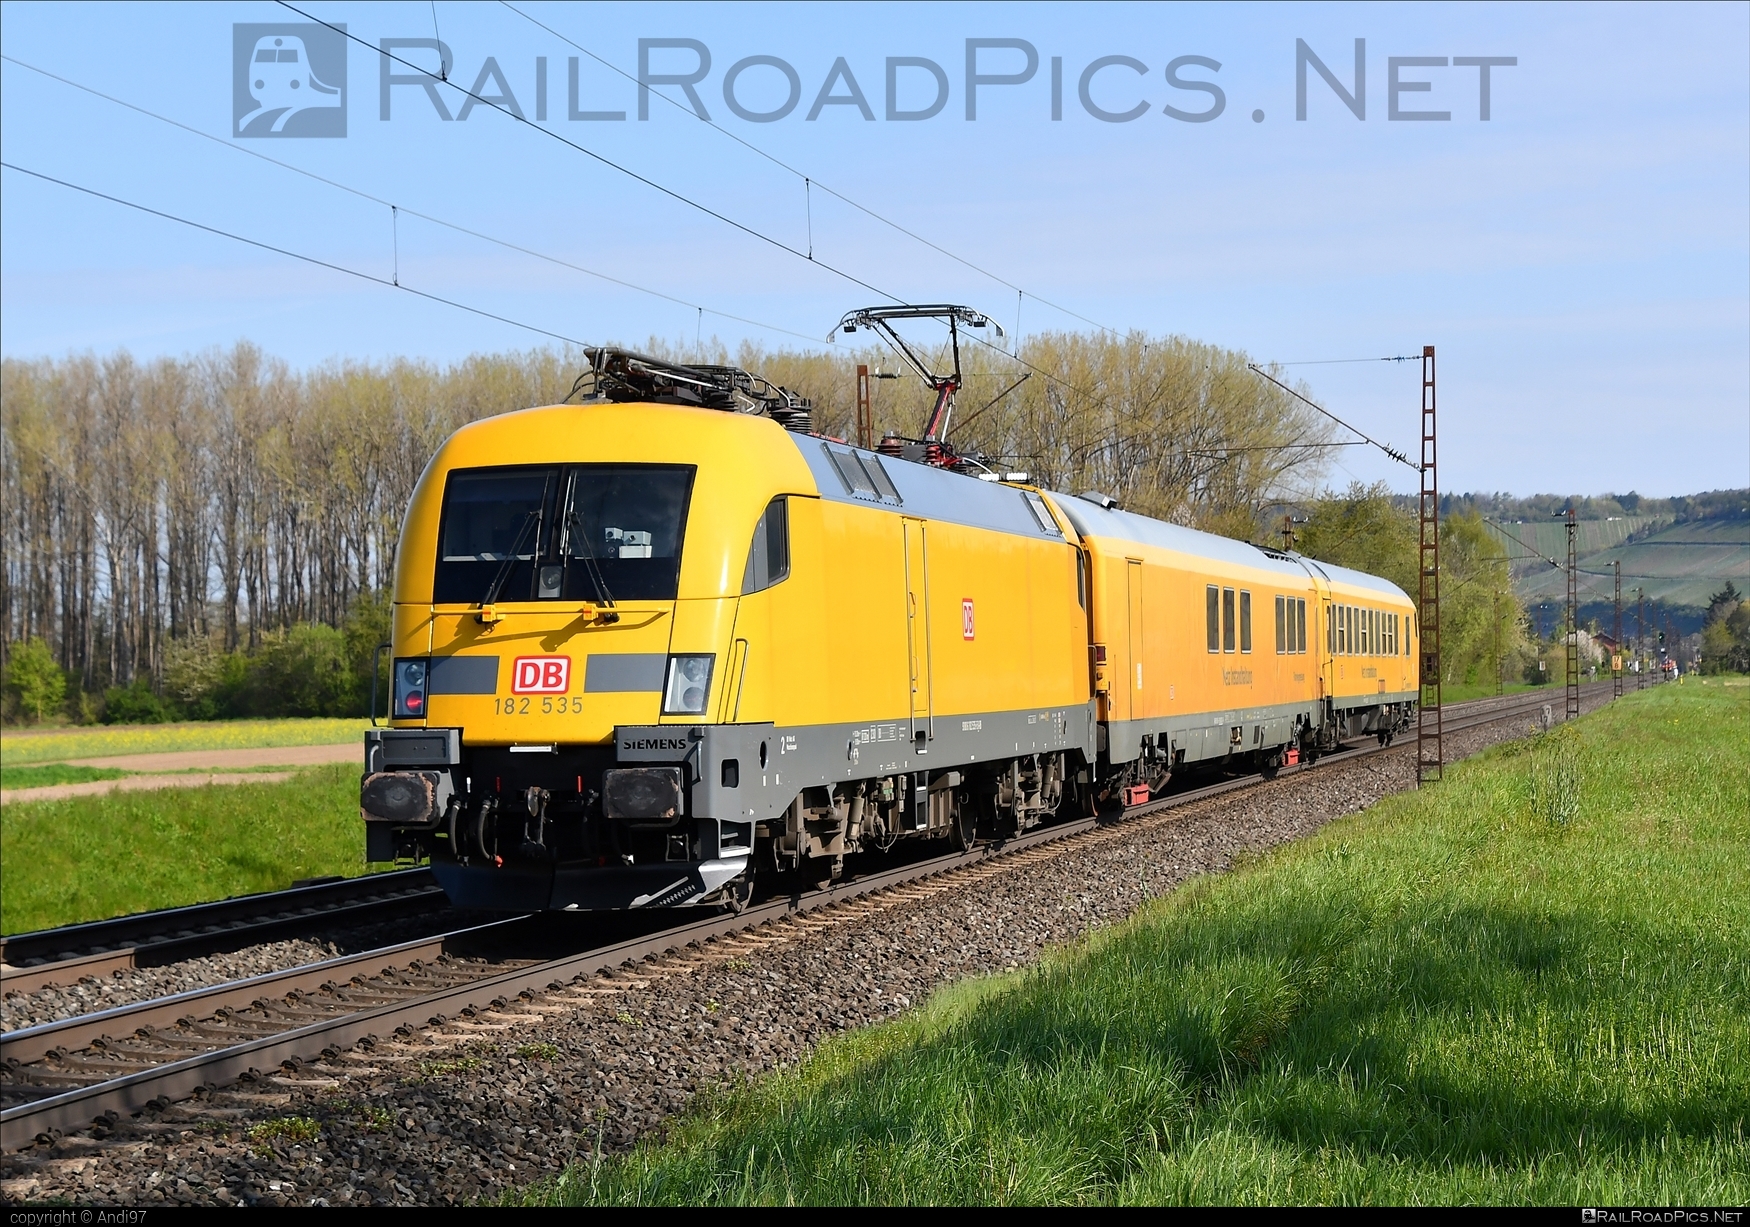 Siemens ES 64 U2 - 182 535 operated by Deutsche Bahn / DB AG #db #deutschebahn #es64 #es64u2 #eurosprinter #siemens #siemensEs64 #siemensEs64u2 #siemenstaurus #taurus #tauruslocomotive